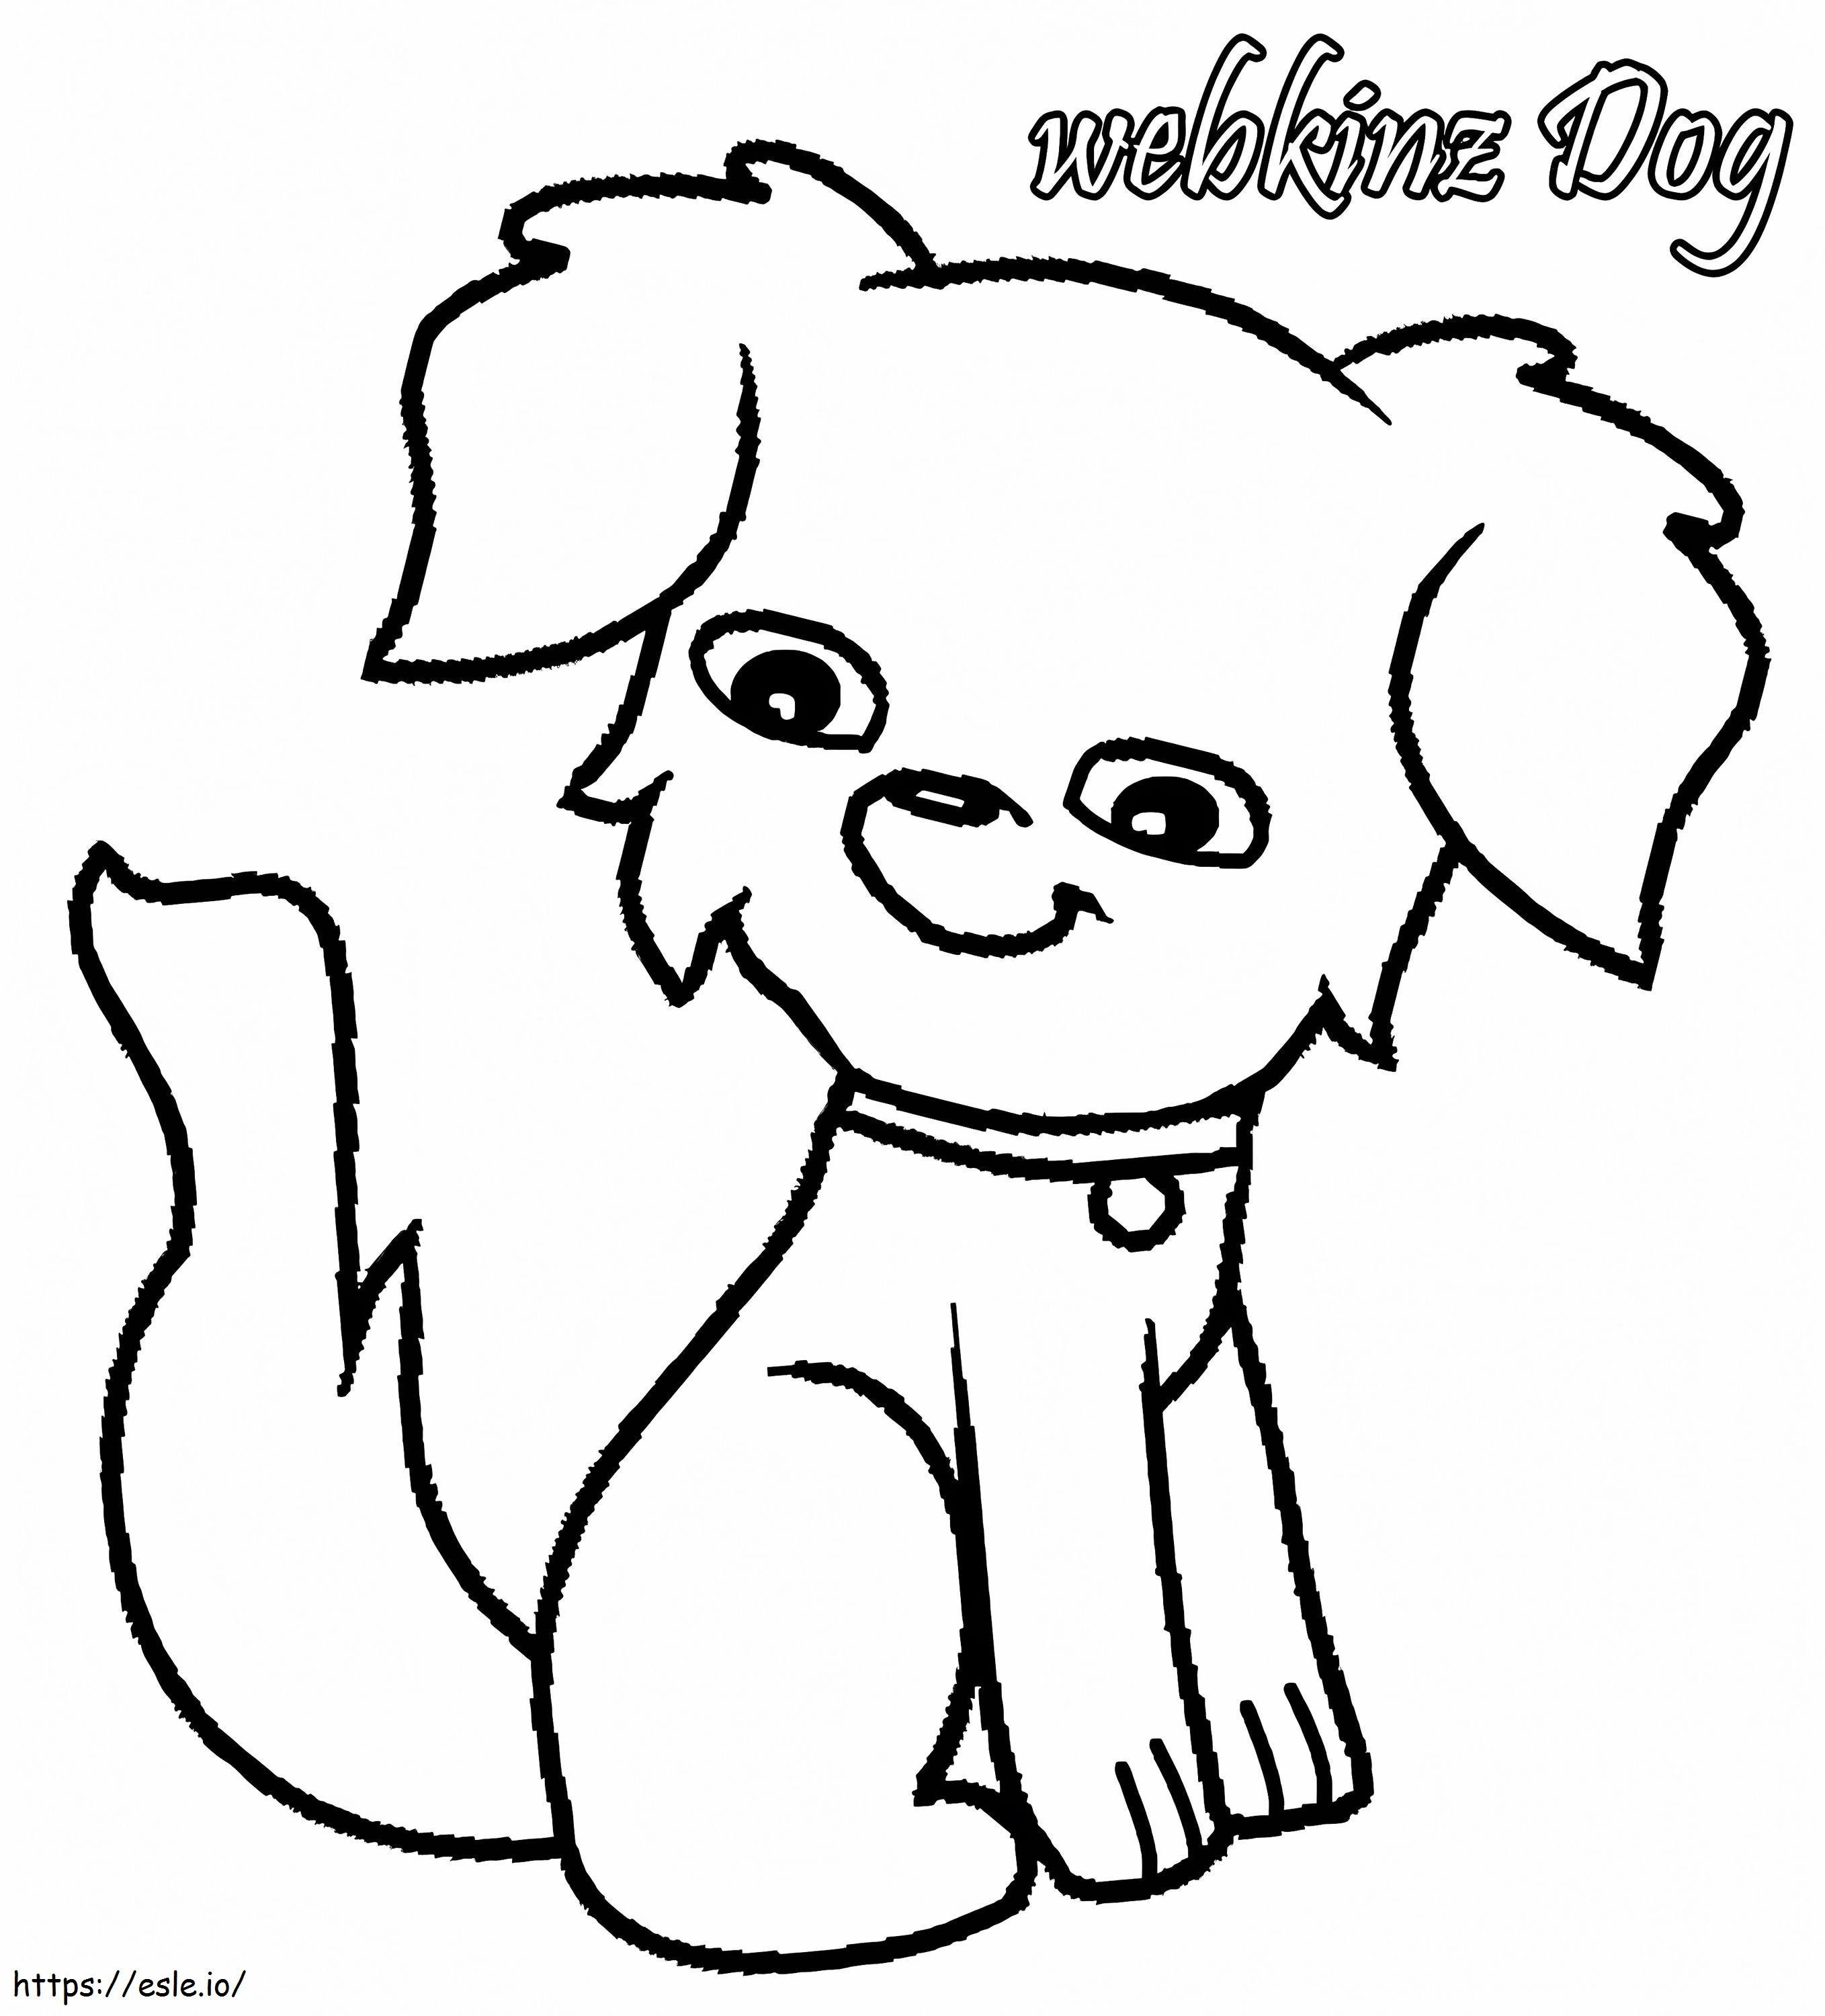 Anjing Webkinz yang lucu Gambar Mewarnai